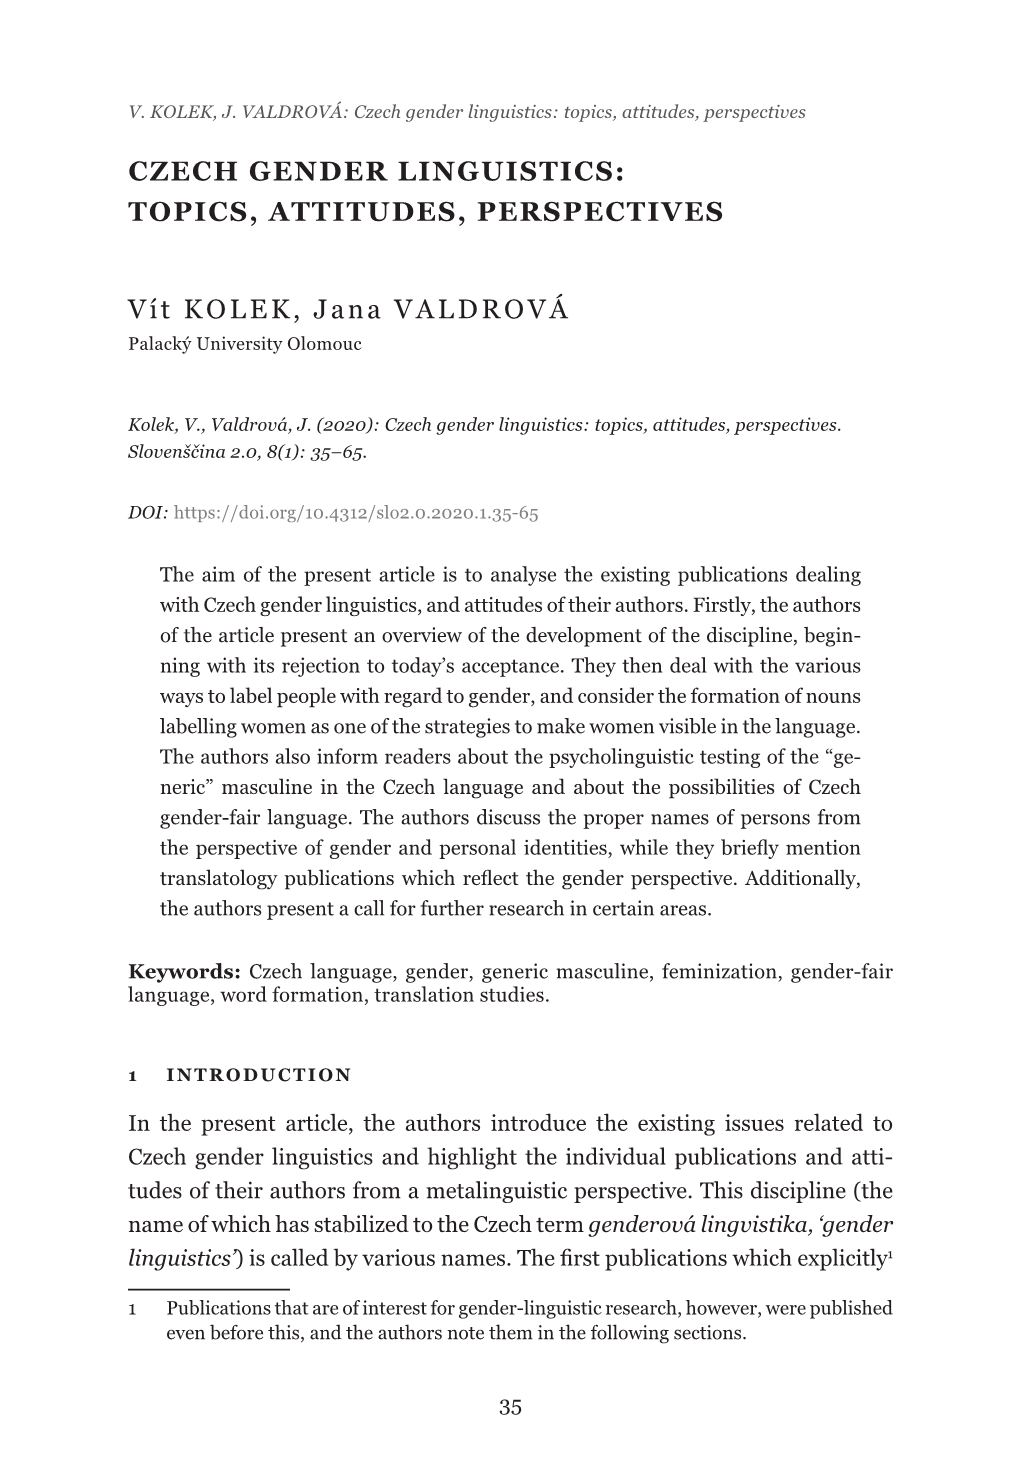 Czech Gender Linguistics: Topics, Attitudes, Perspectives